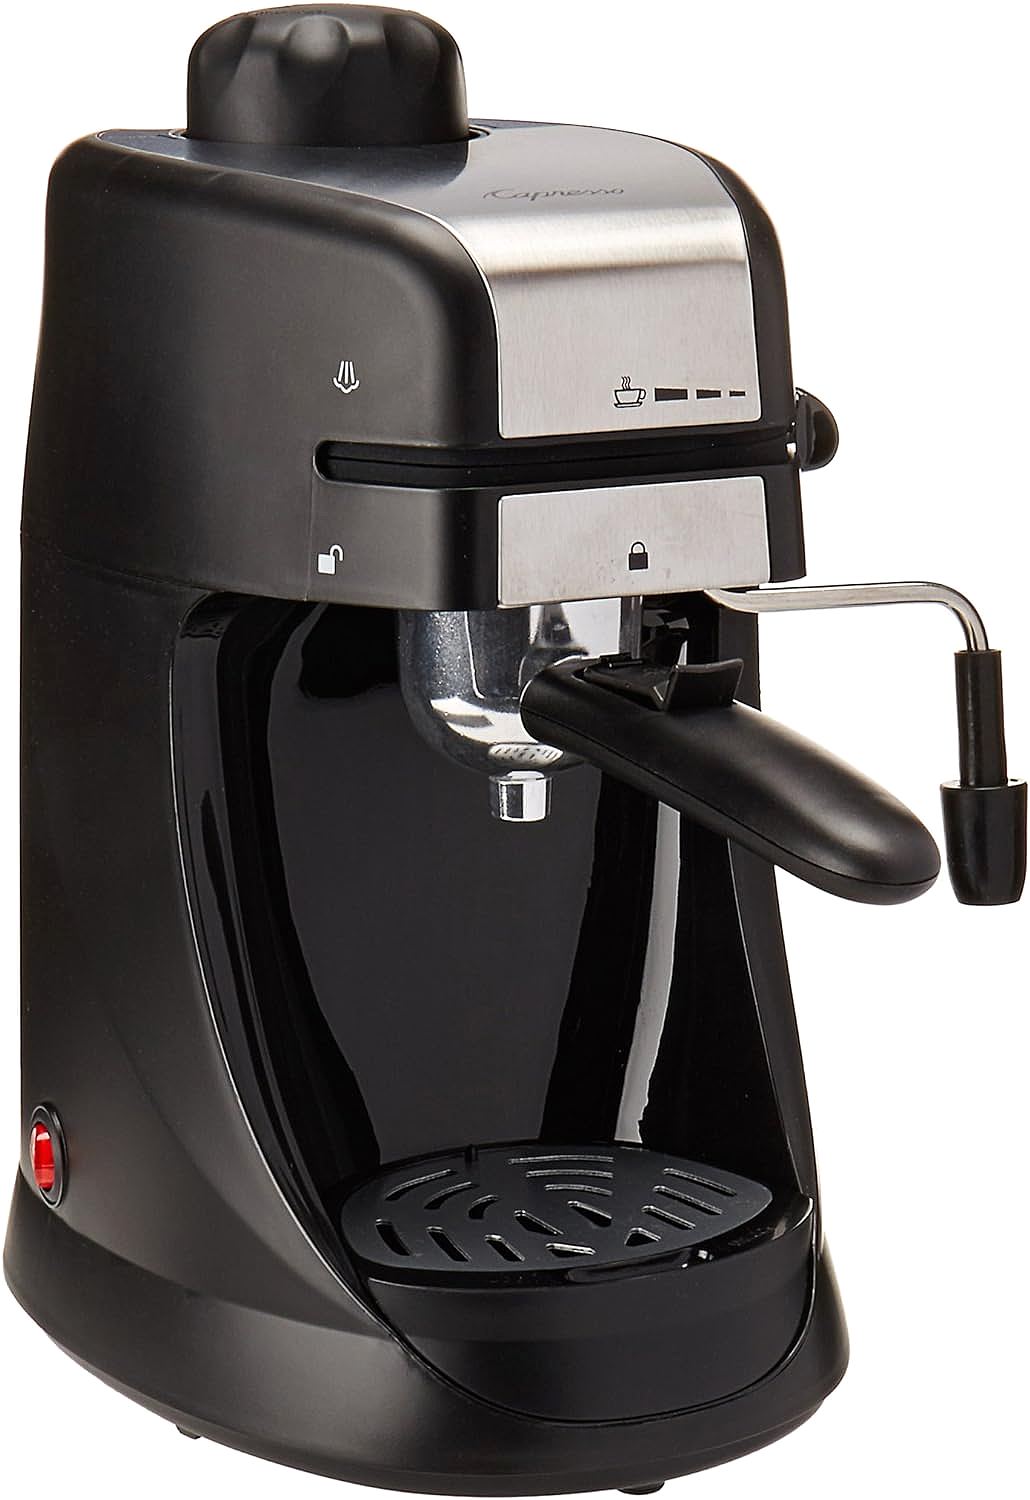 Capresso Steam PRO 304 Espresso Machine: A Simple and Functional Home Espresso Experience